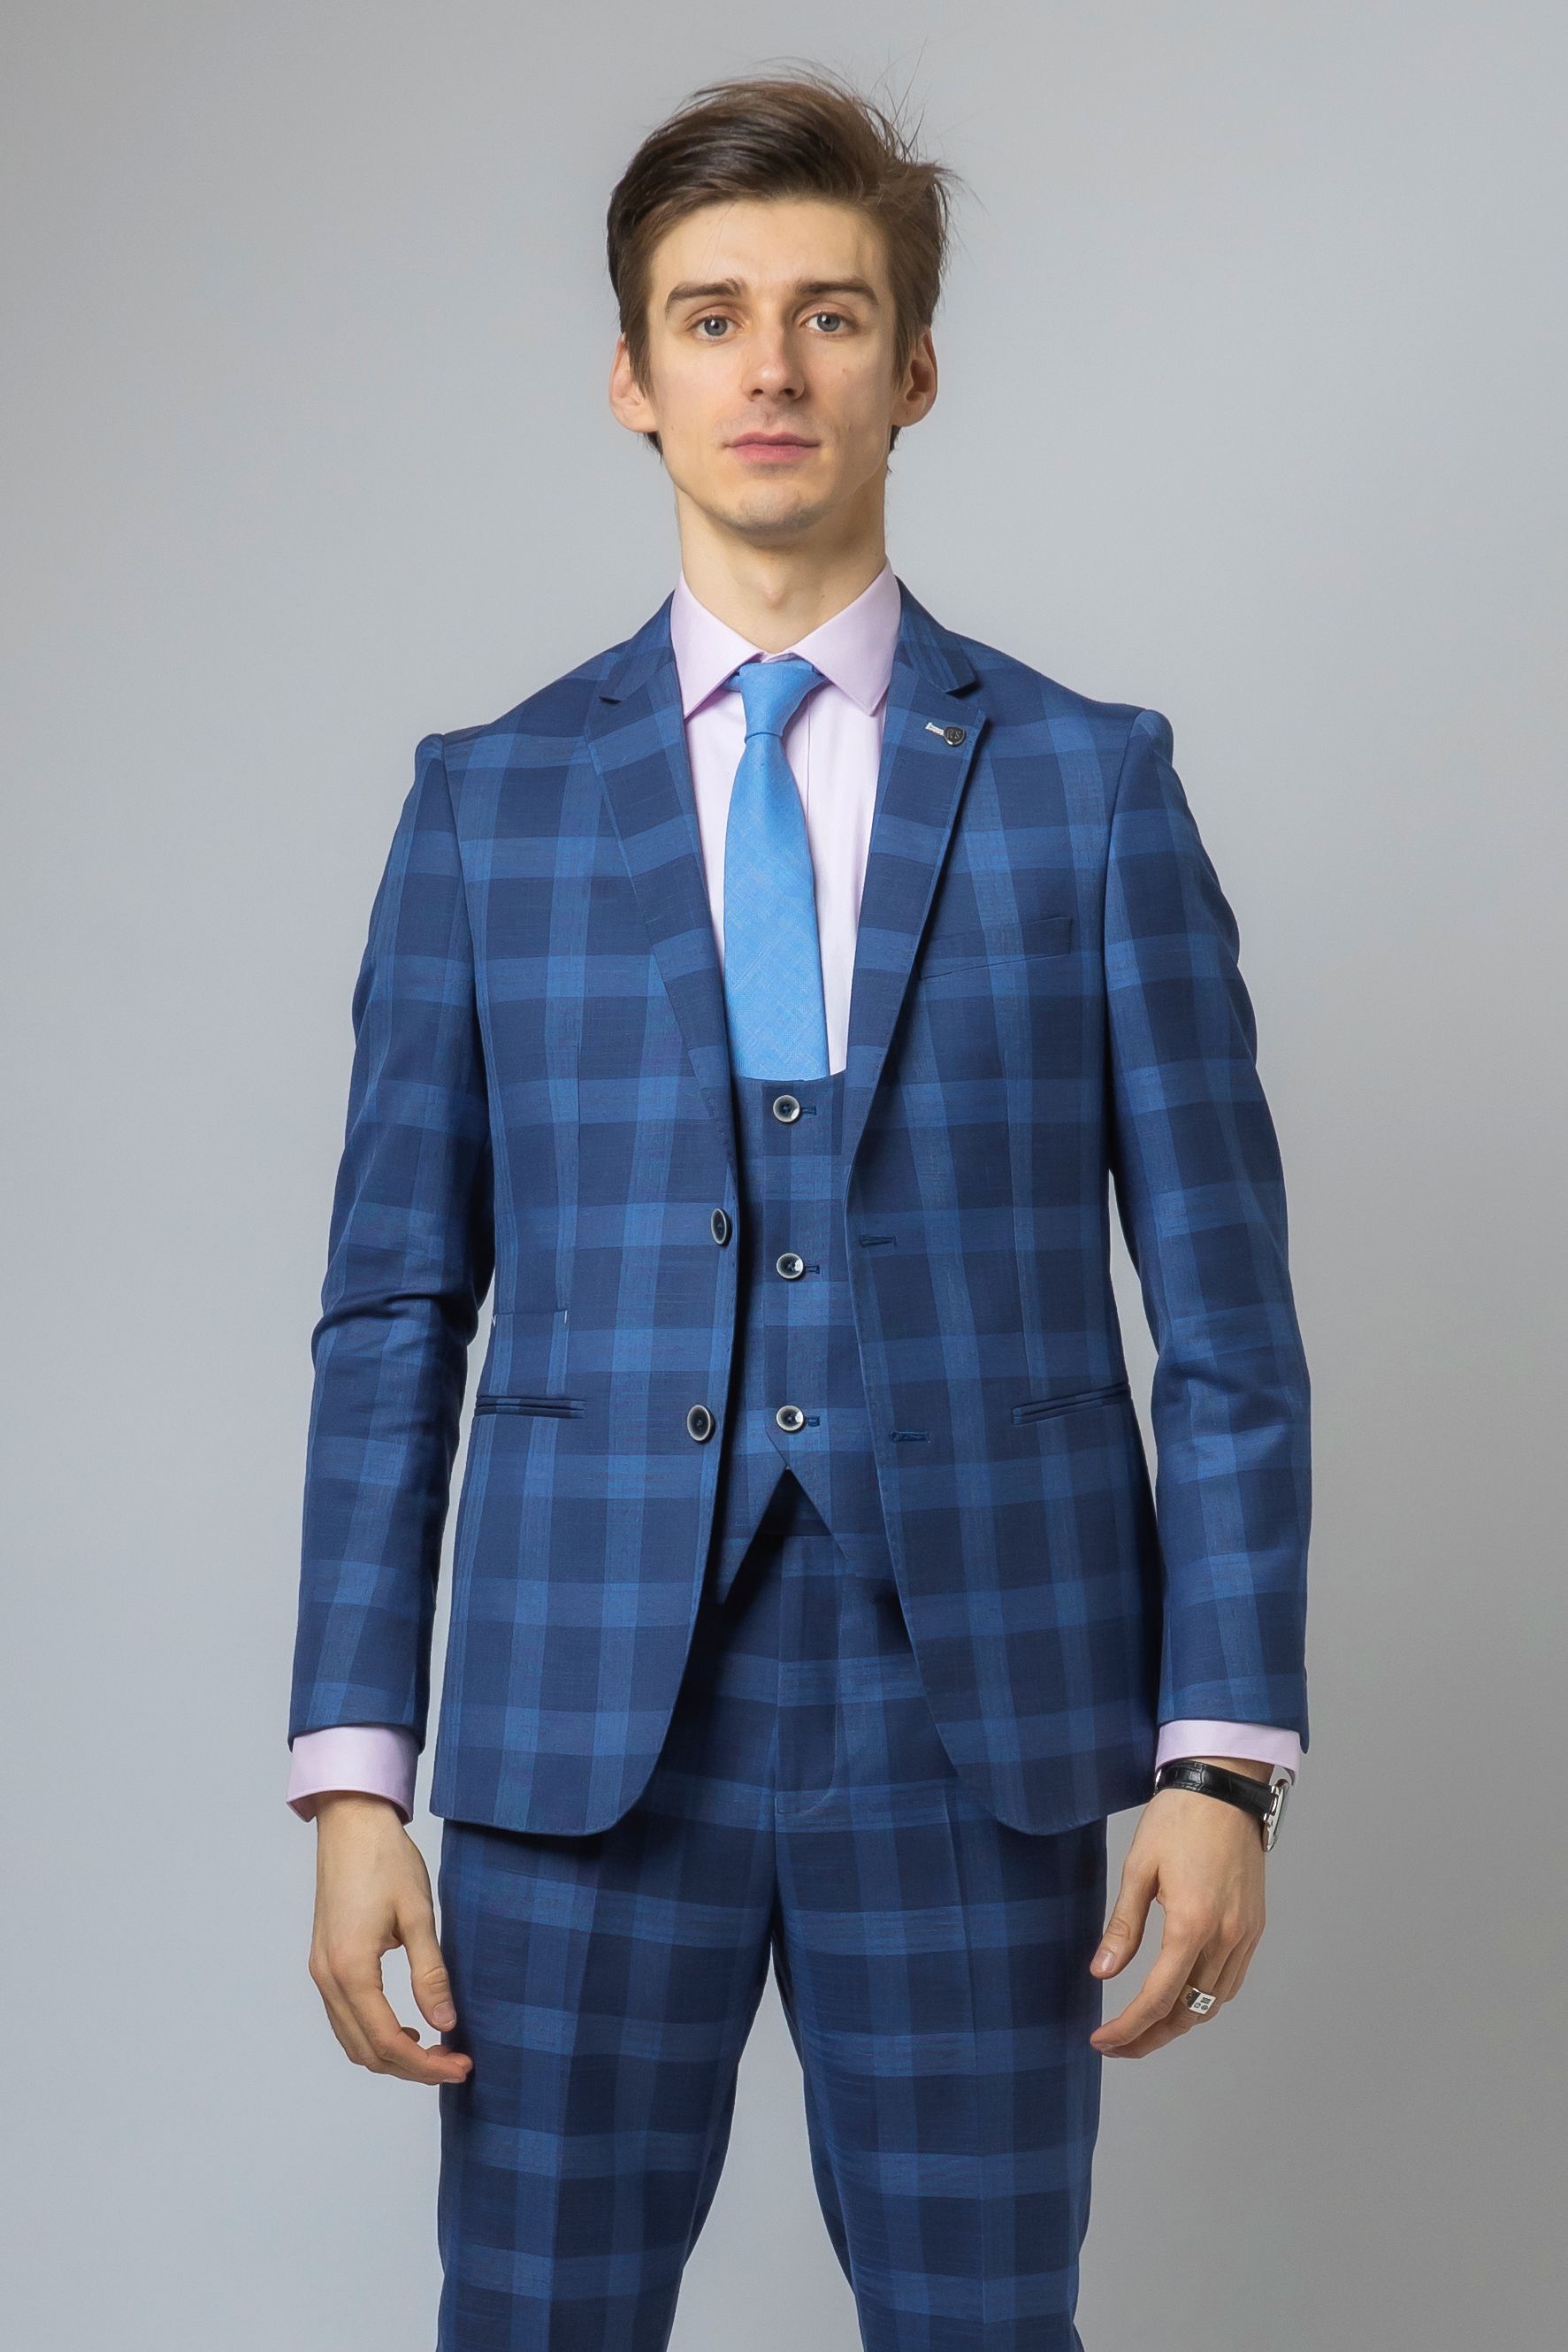 Men's Check Slim Fit Blue Suit Jacket - Hunter